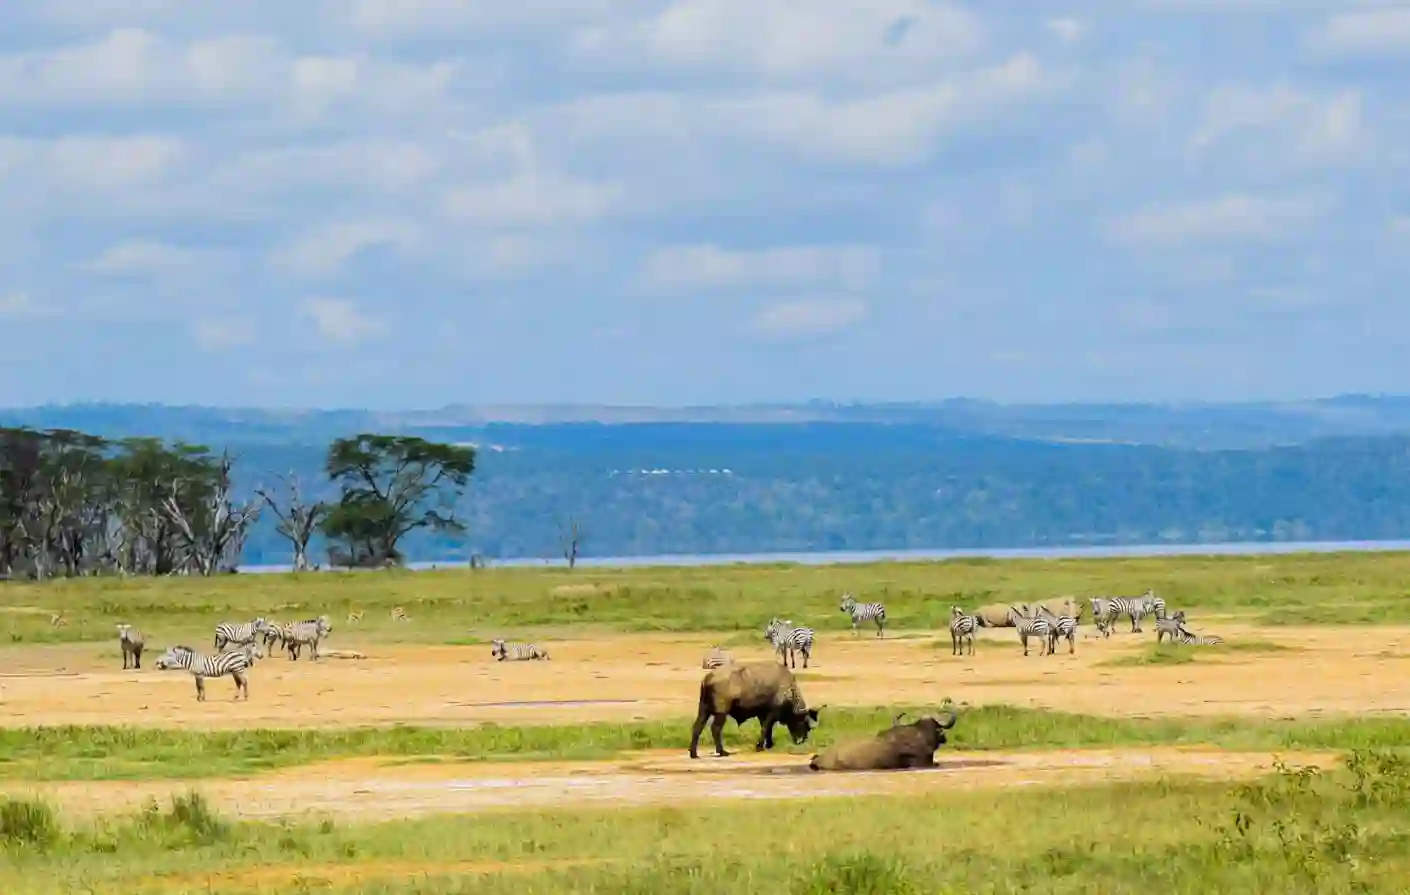 I:\AXUMIMAGES\Afrika\Kenya\Great Rift Valley\Buffalo and zebra